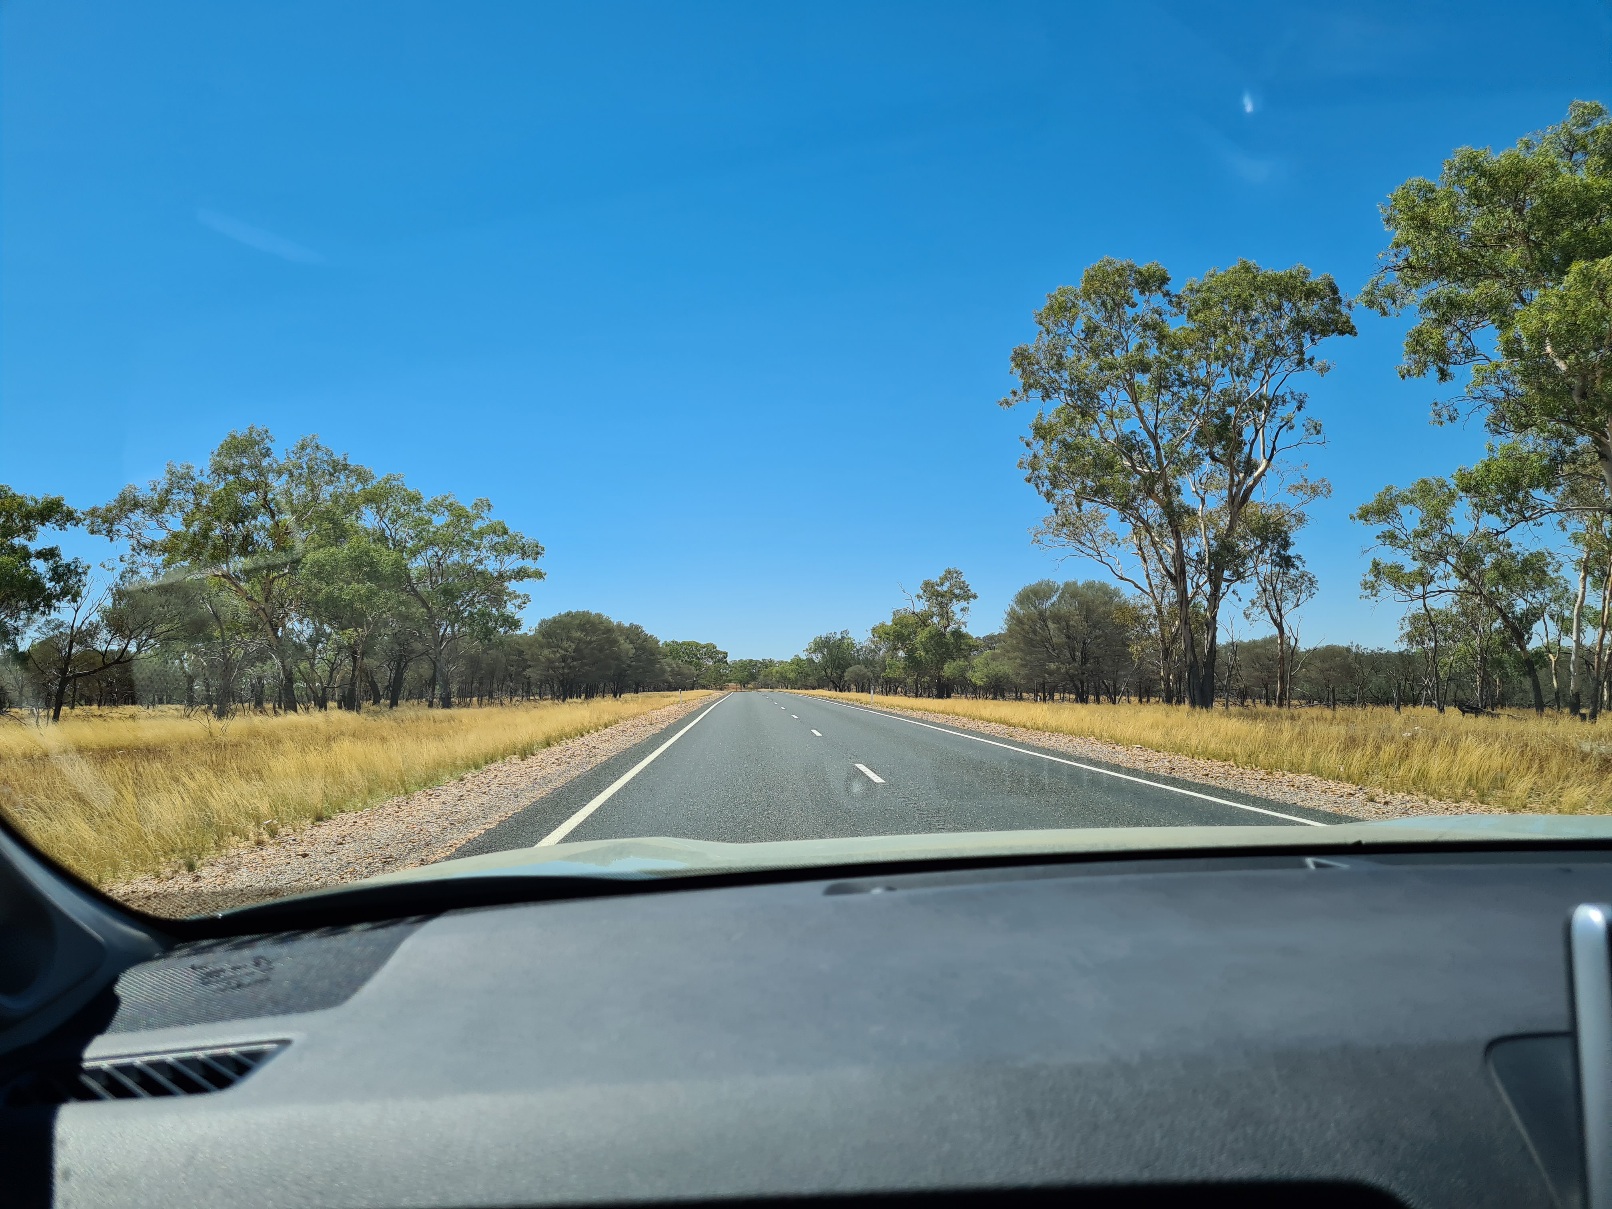 Eucalyptus along the road